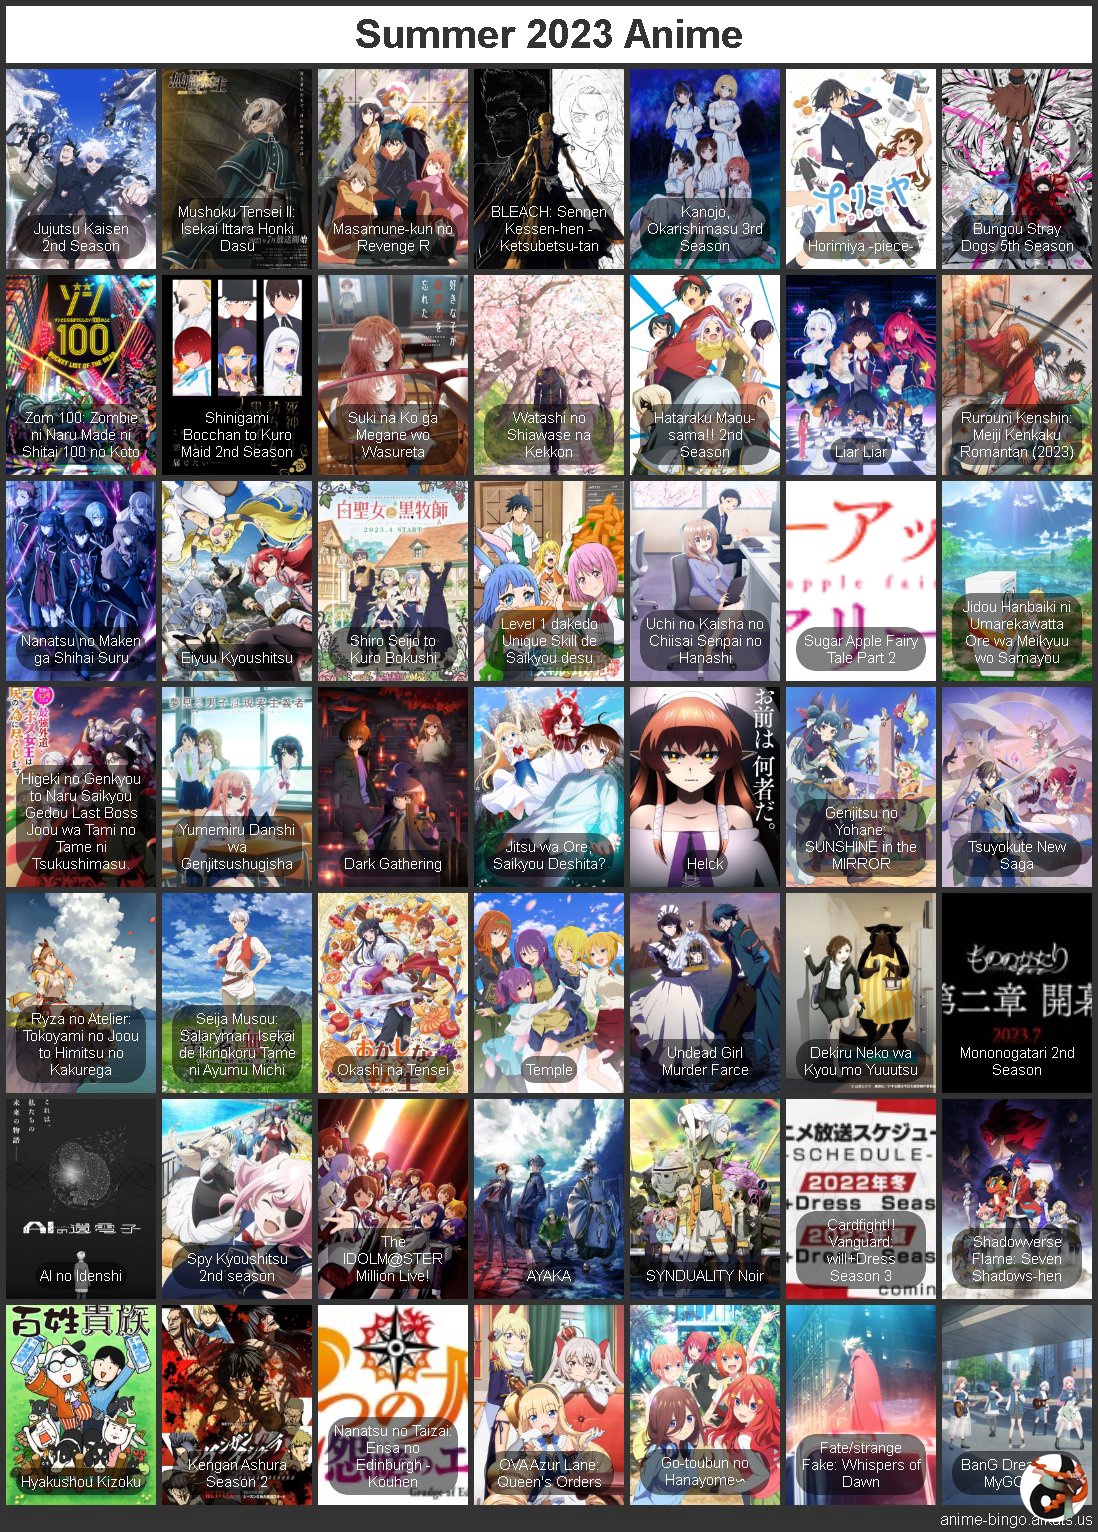 Summer 2023 Anime Lineup